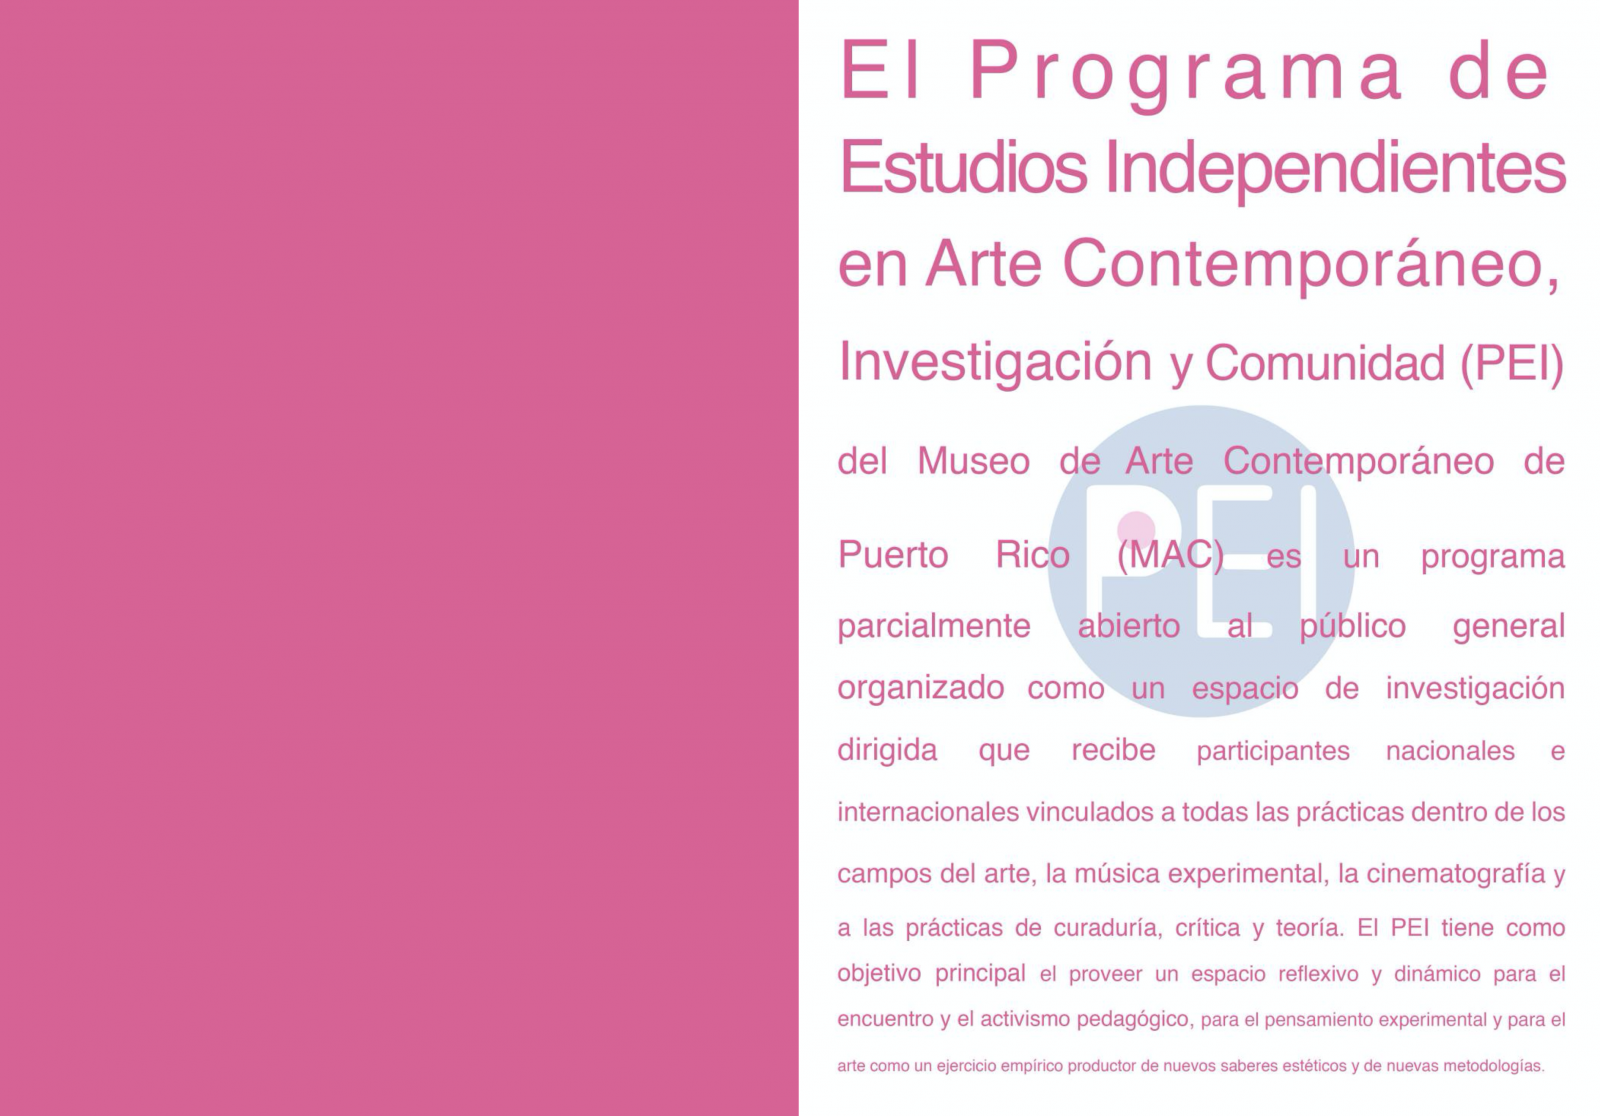 Museum of Contemporary Art: Program of Independent Studies